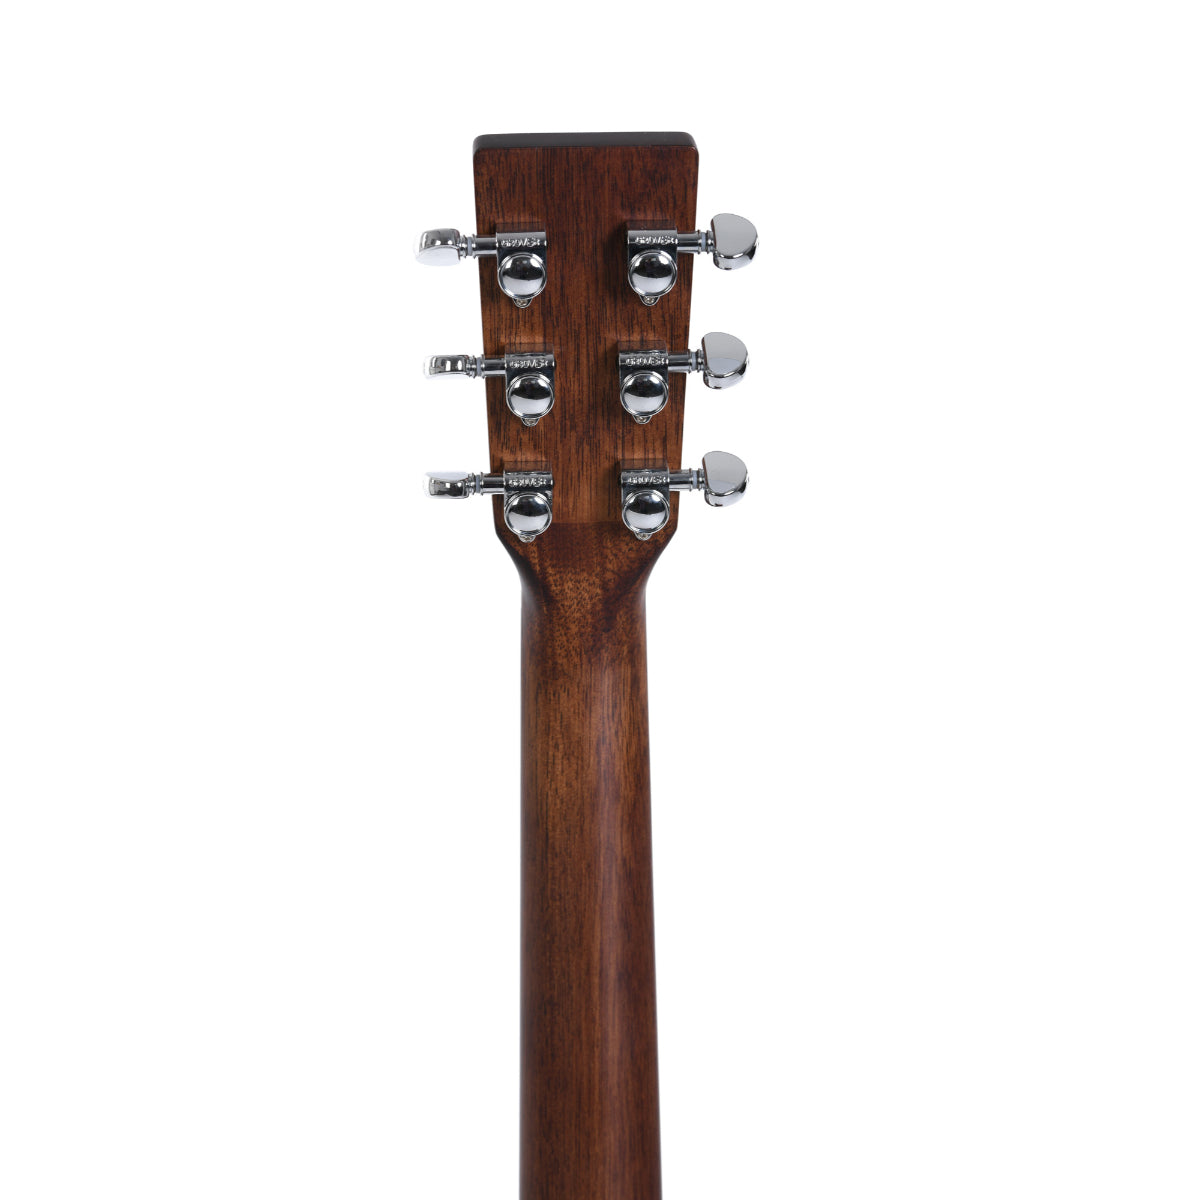 000M-15L Lefthanded Mahogany Acoustic Guitar